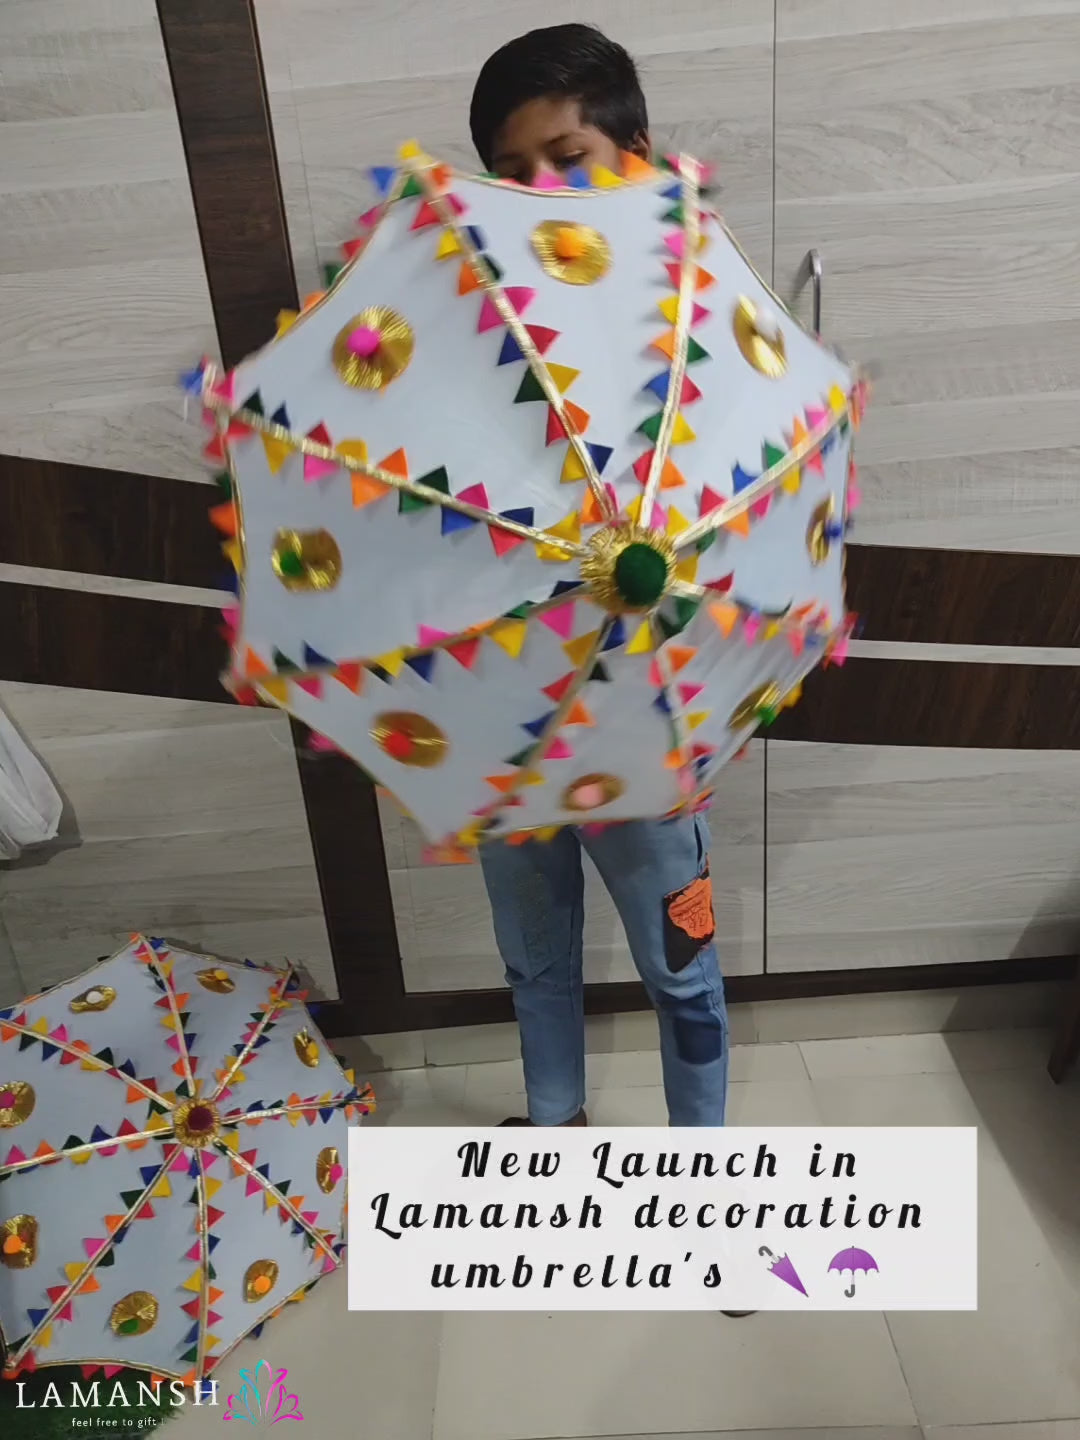 LAMANSH® Decorative Rajasthani Umbrella for Holi & Haldi Decoration / Fabric Decorated Backdrop Umbrella's for Haldi & Mehendi ceremony